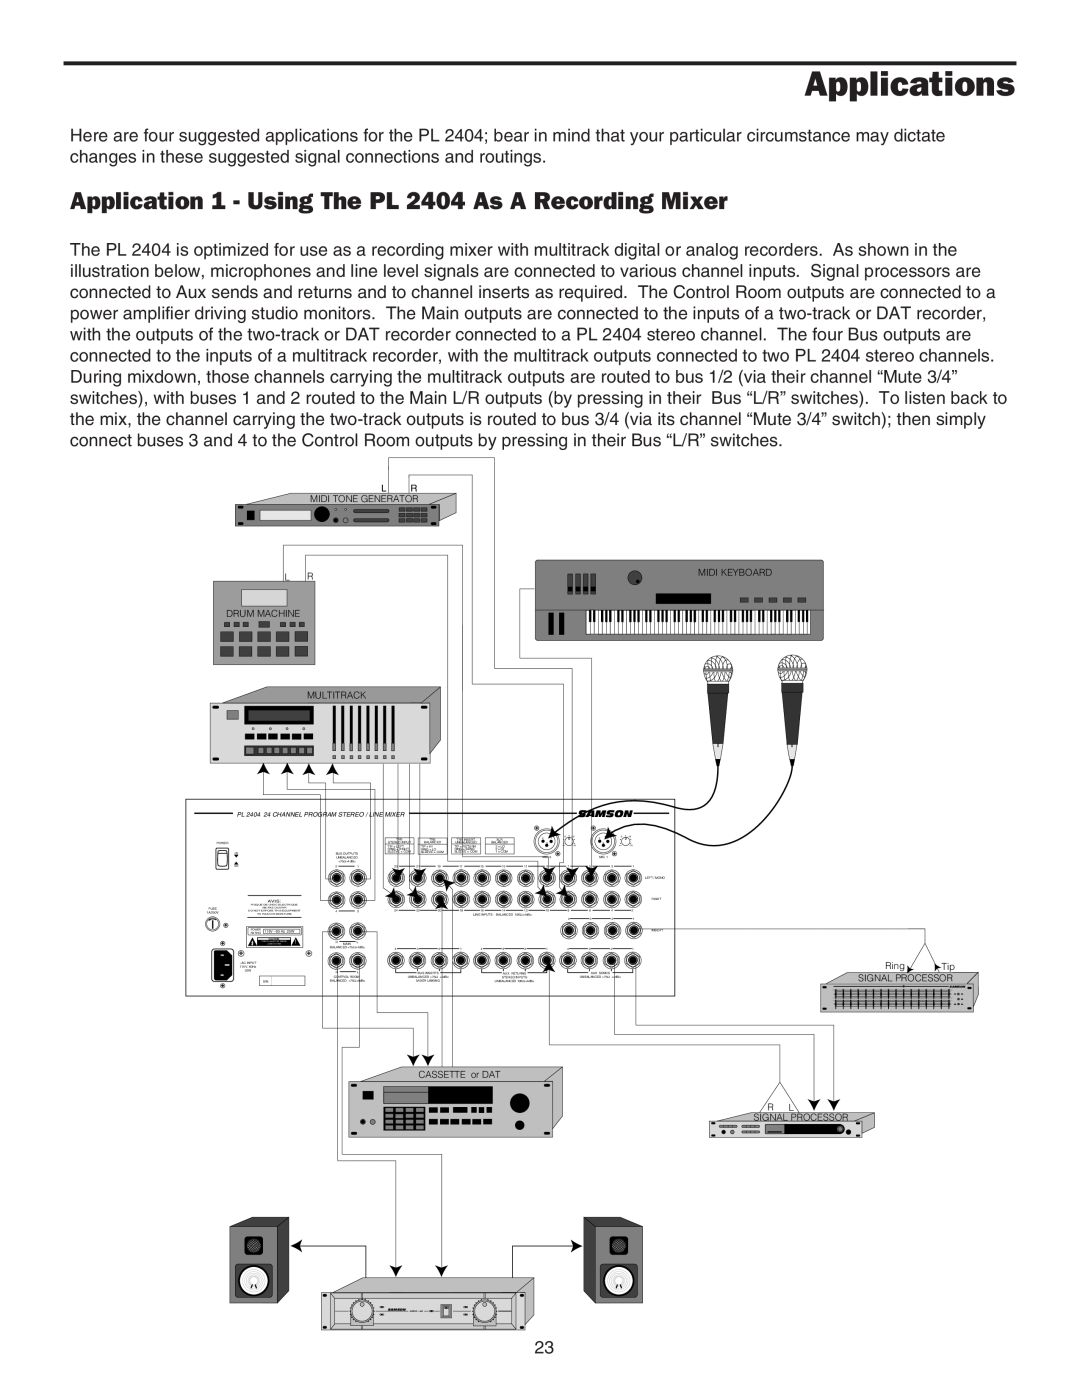 Samson PL2404 manual Applications, Application 1 - Using The PL 2404 As A Recording Mixer 